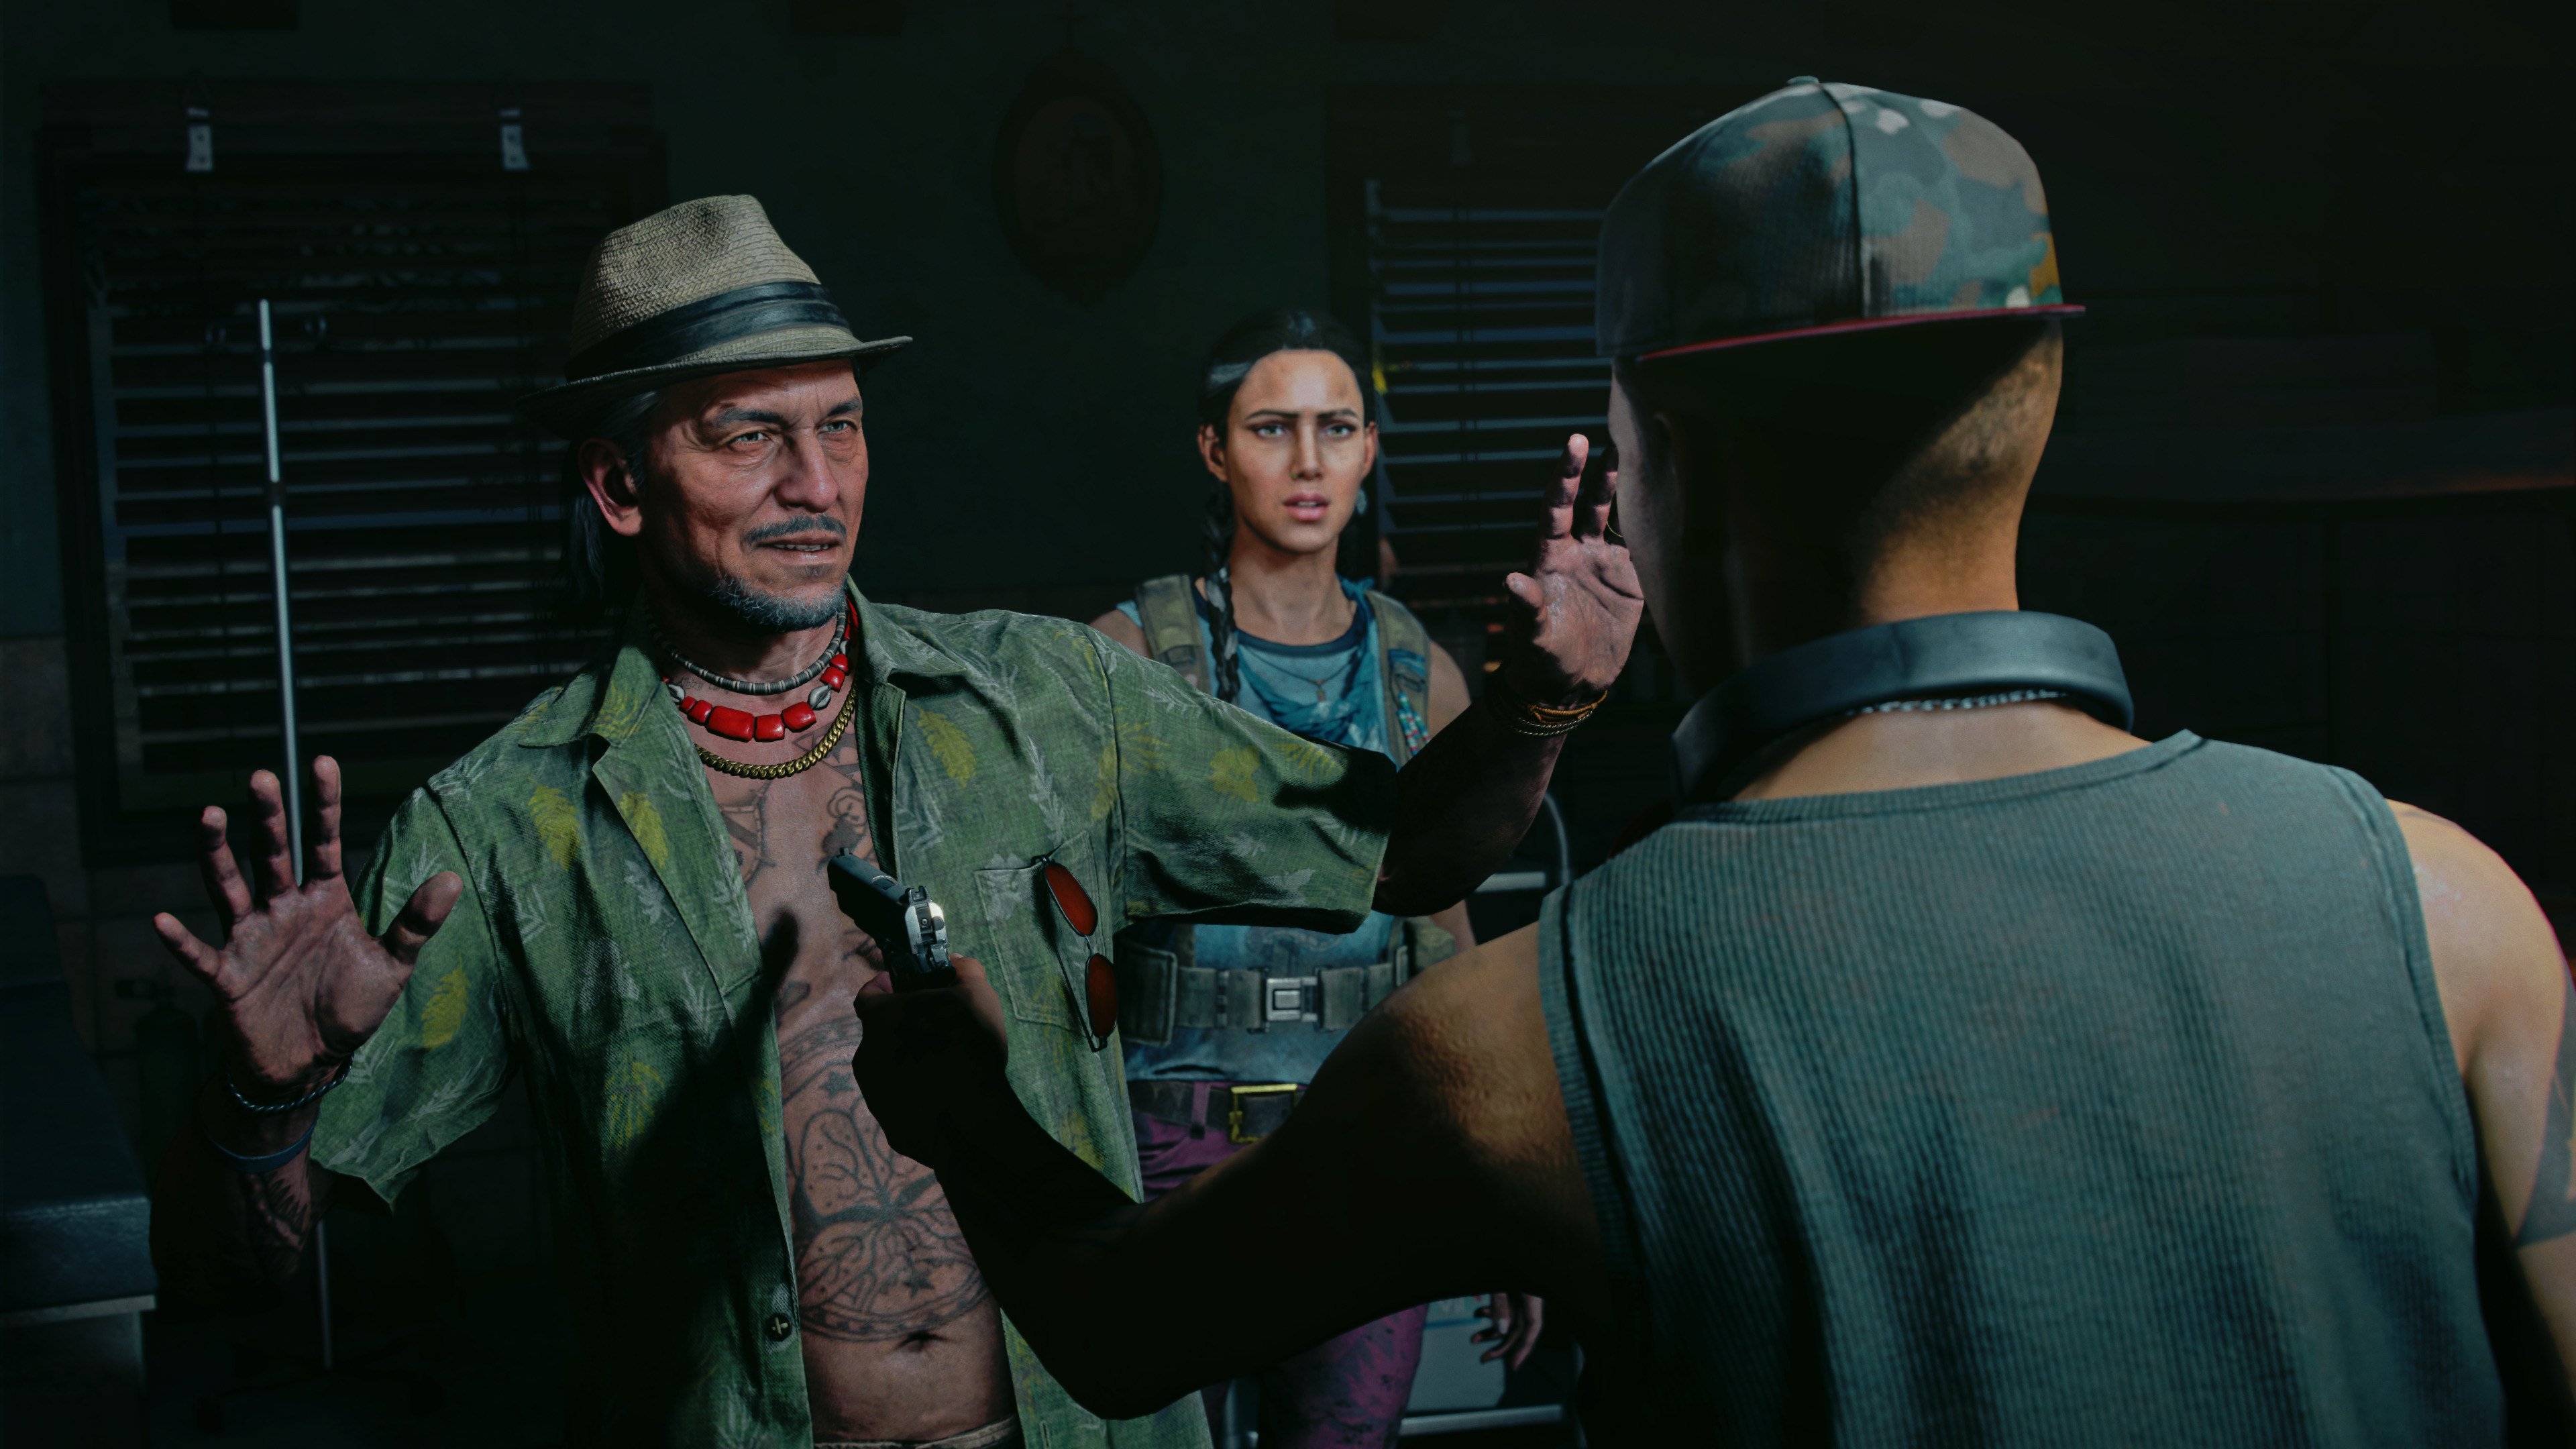 Handy-Wallpaper Computerspiele, Far Cry, Far Cry 6 kostenlos herunterladen.